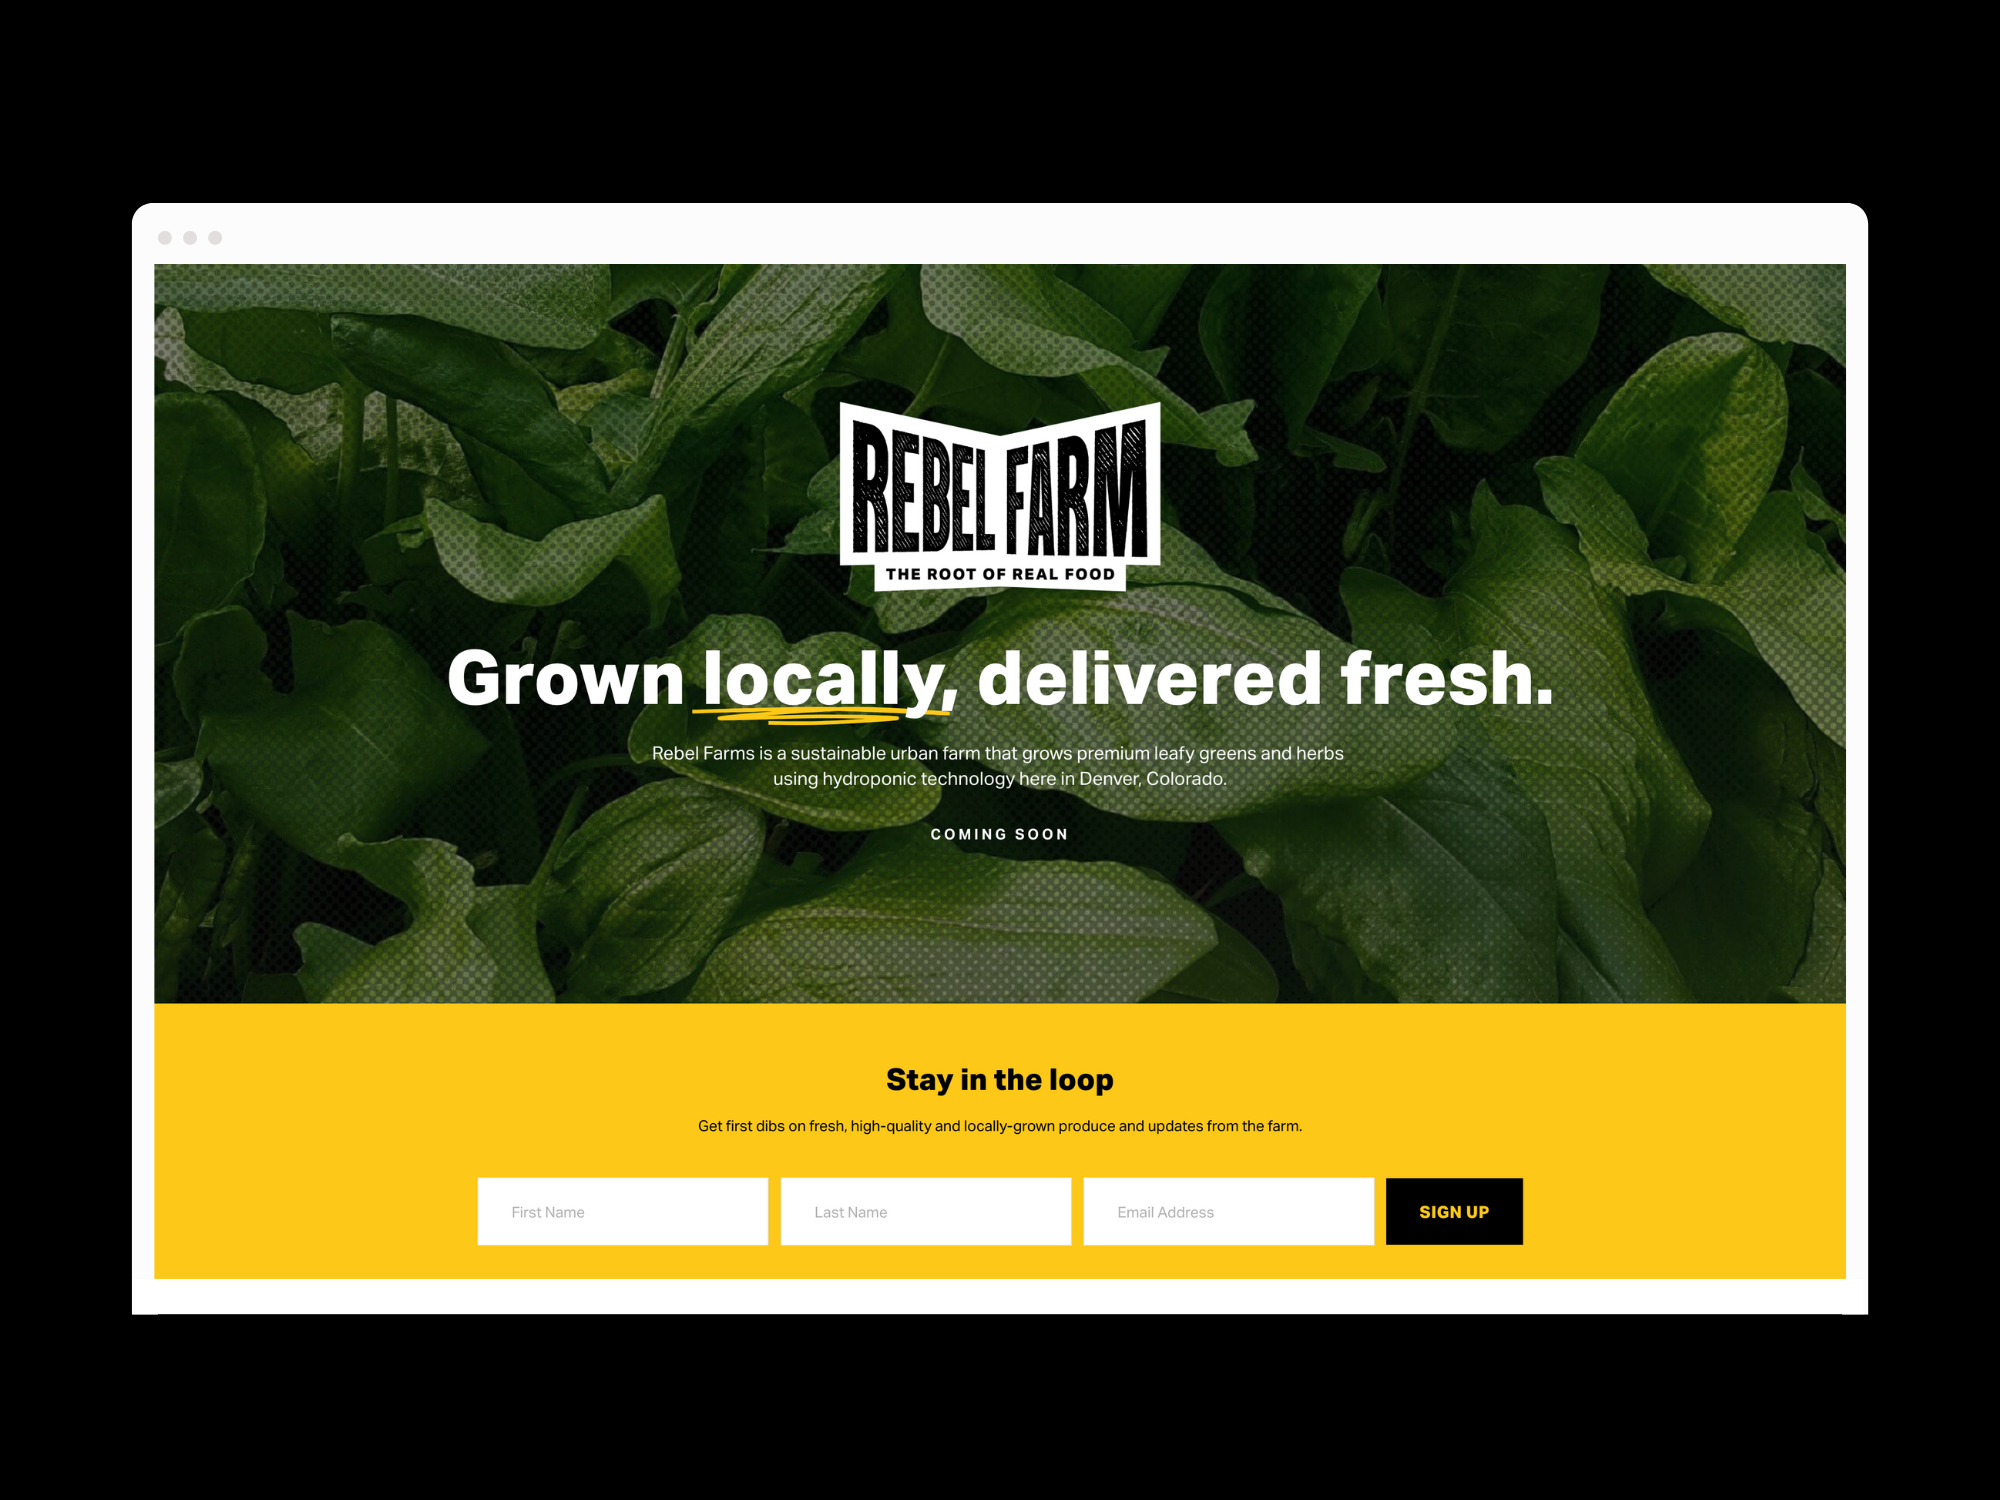 Rebel Farm brand and website designed by Alexa B. Taylor